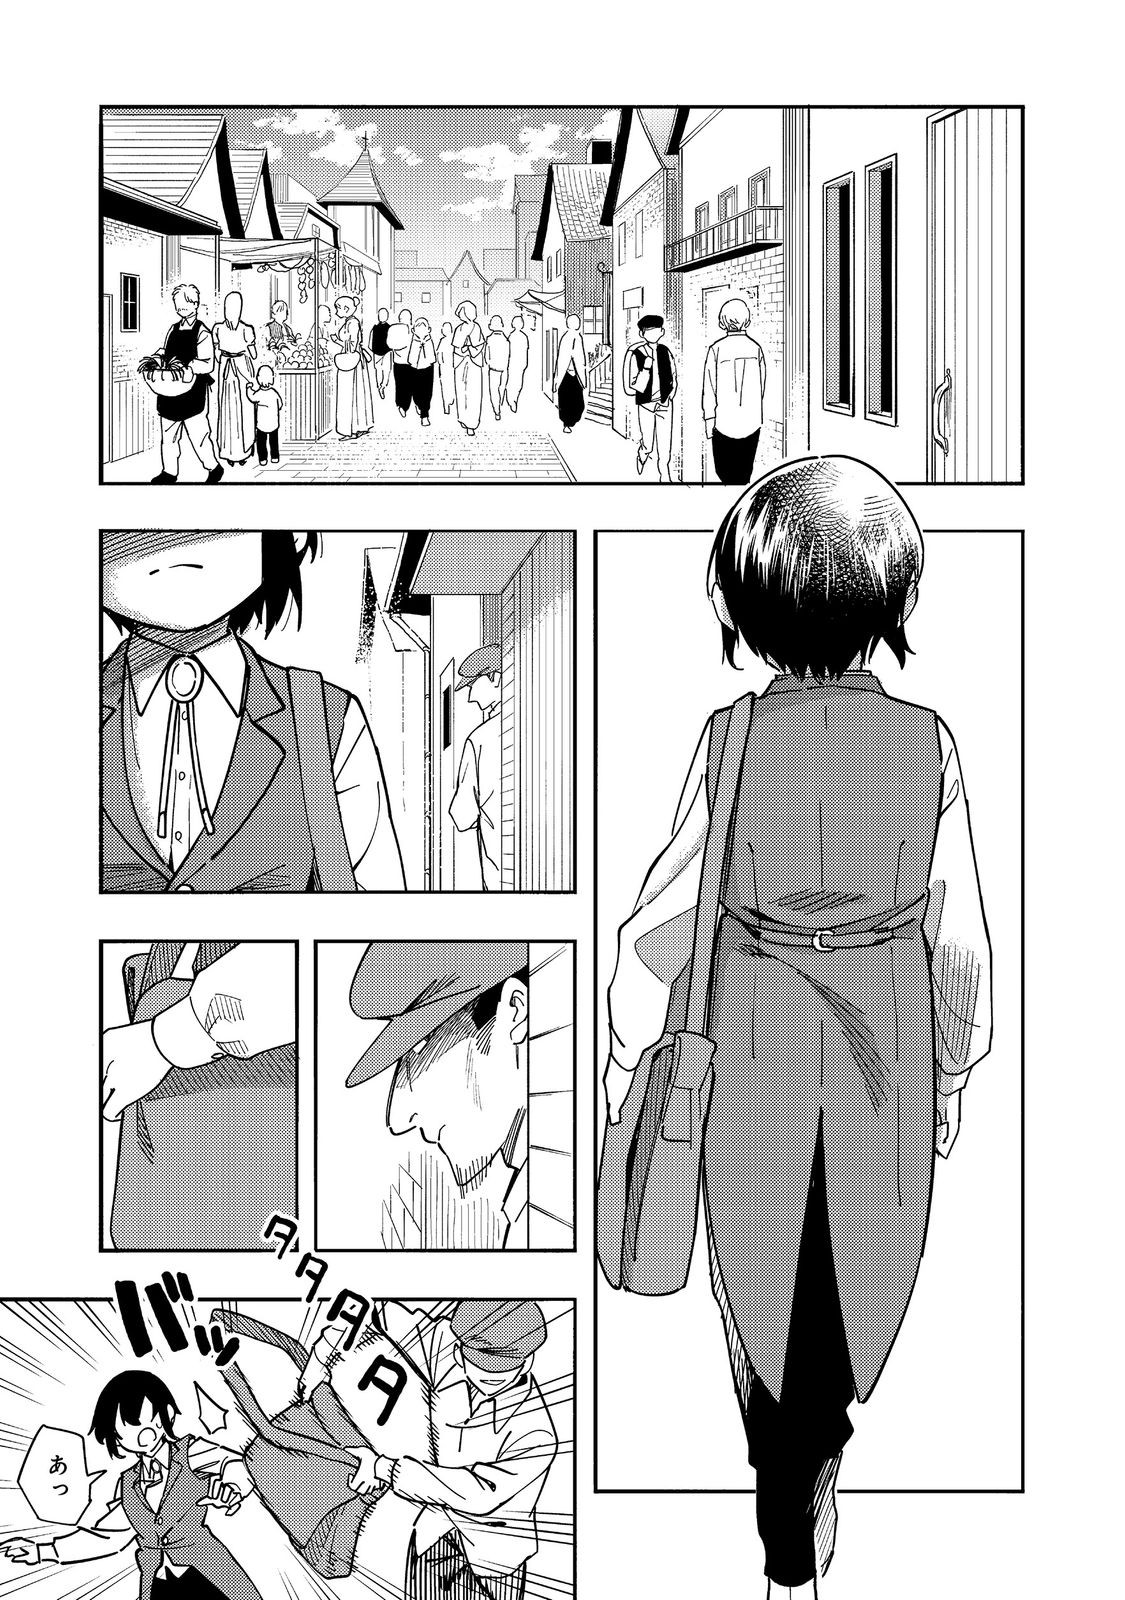 Kyou mo E ni Kaita Mochi ga Umai - Chapter 25 - Page 1